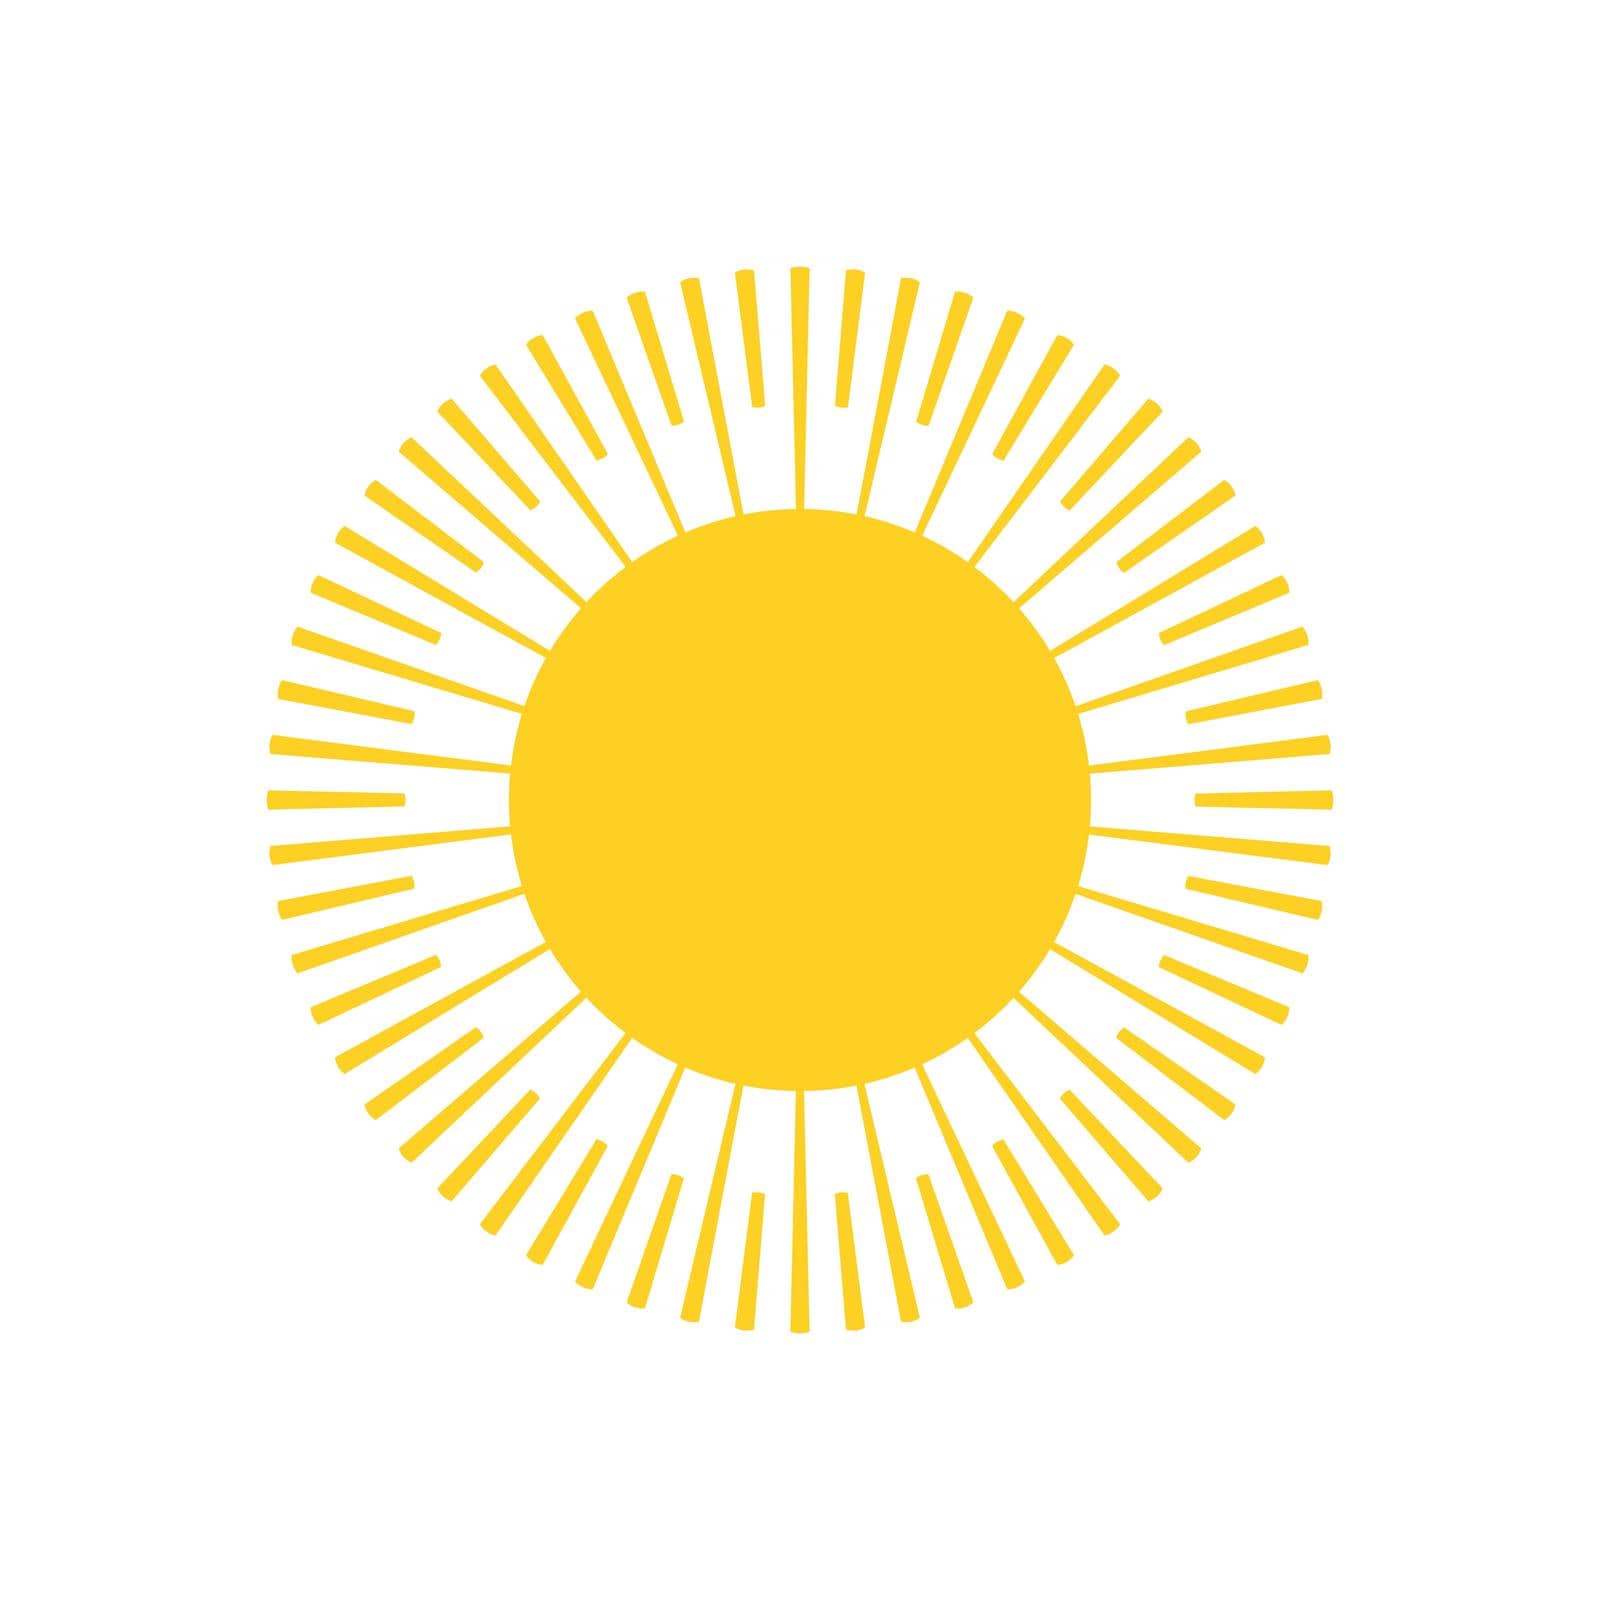 Yellow Sun burst icon or logo. Modern simple flat sunlight, sign. Business, internet concept. Trendy vector summer symbol. Logo Vector illustration